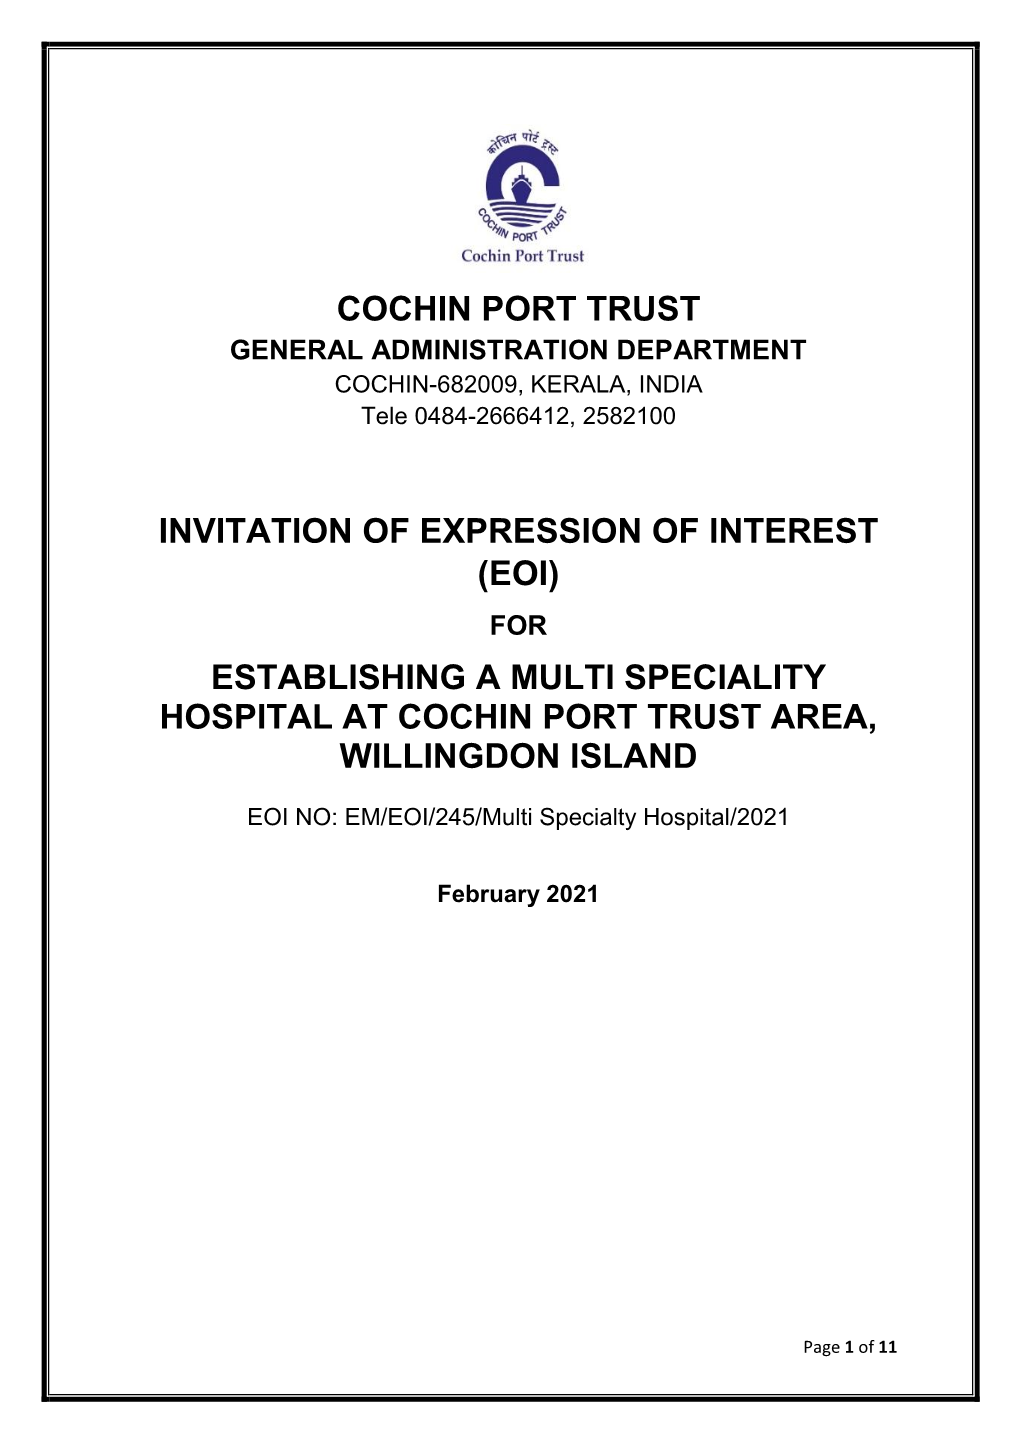 Eoi) for Establishing a Multi Speciality Hospital at Cochin Port Trust Area, Willingdon Island